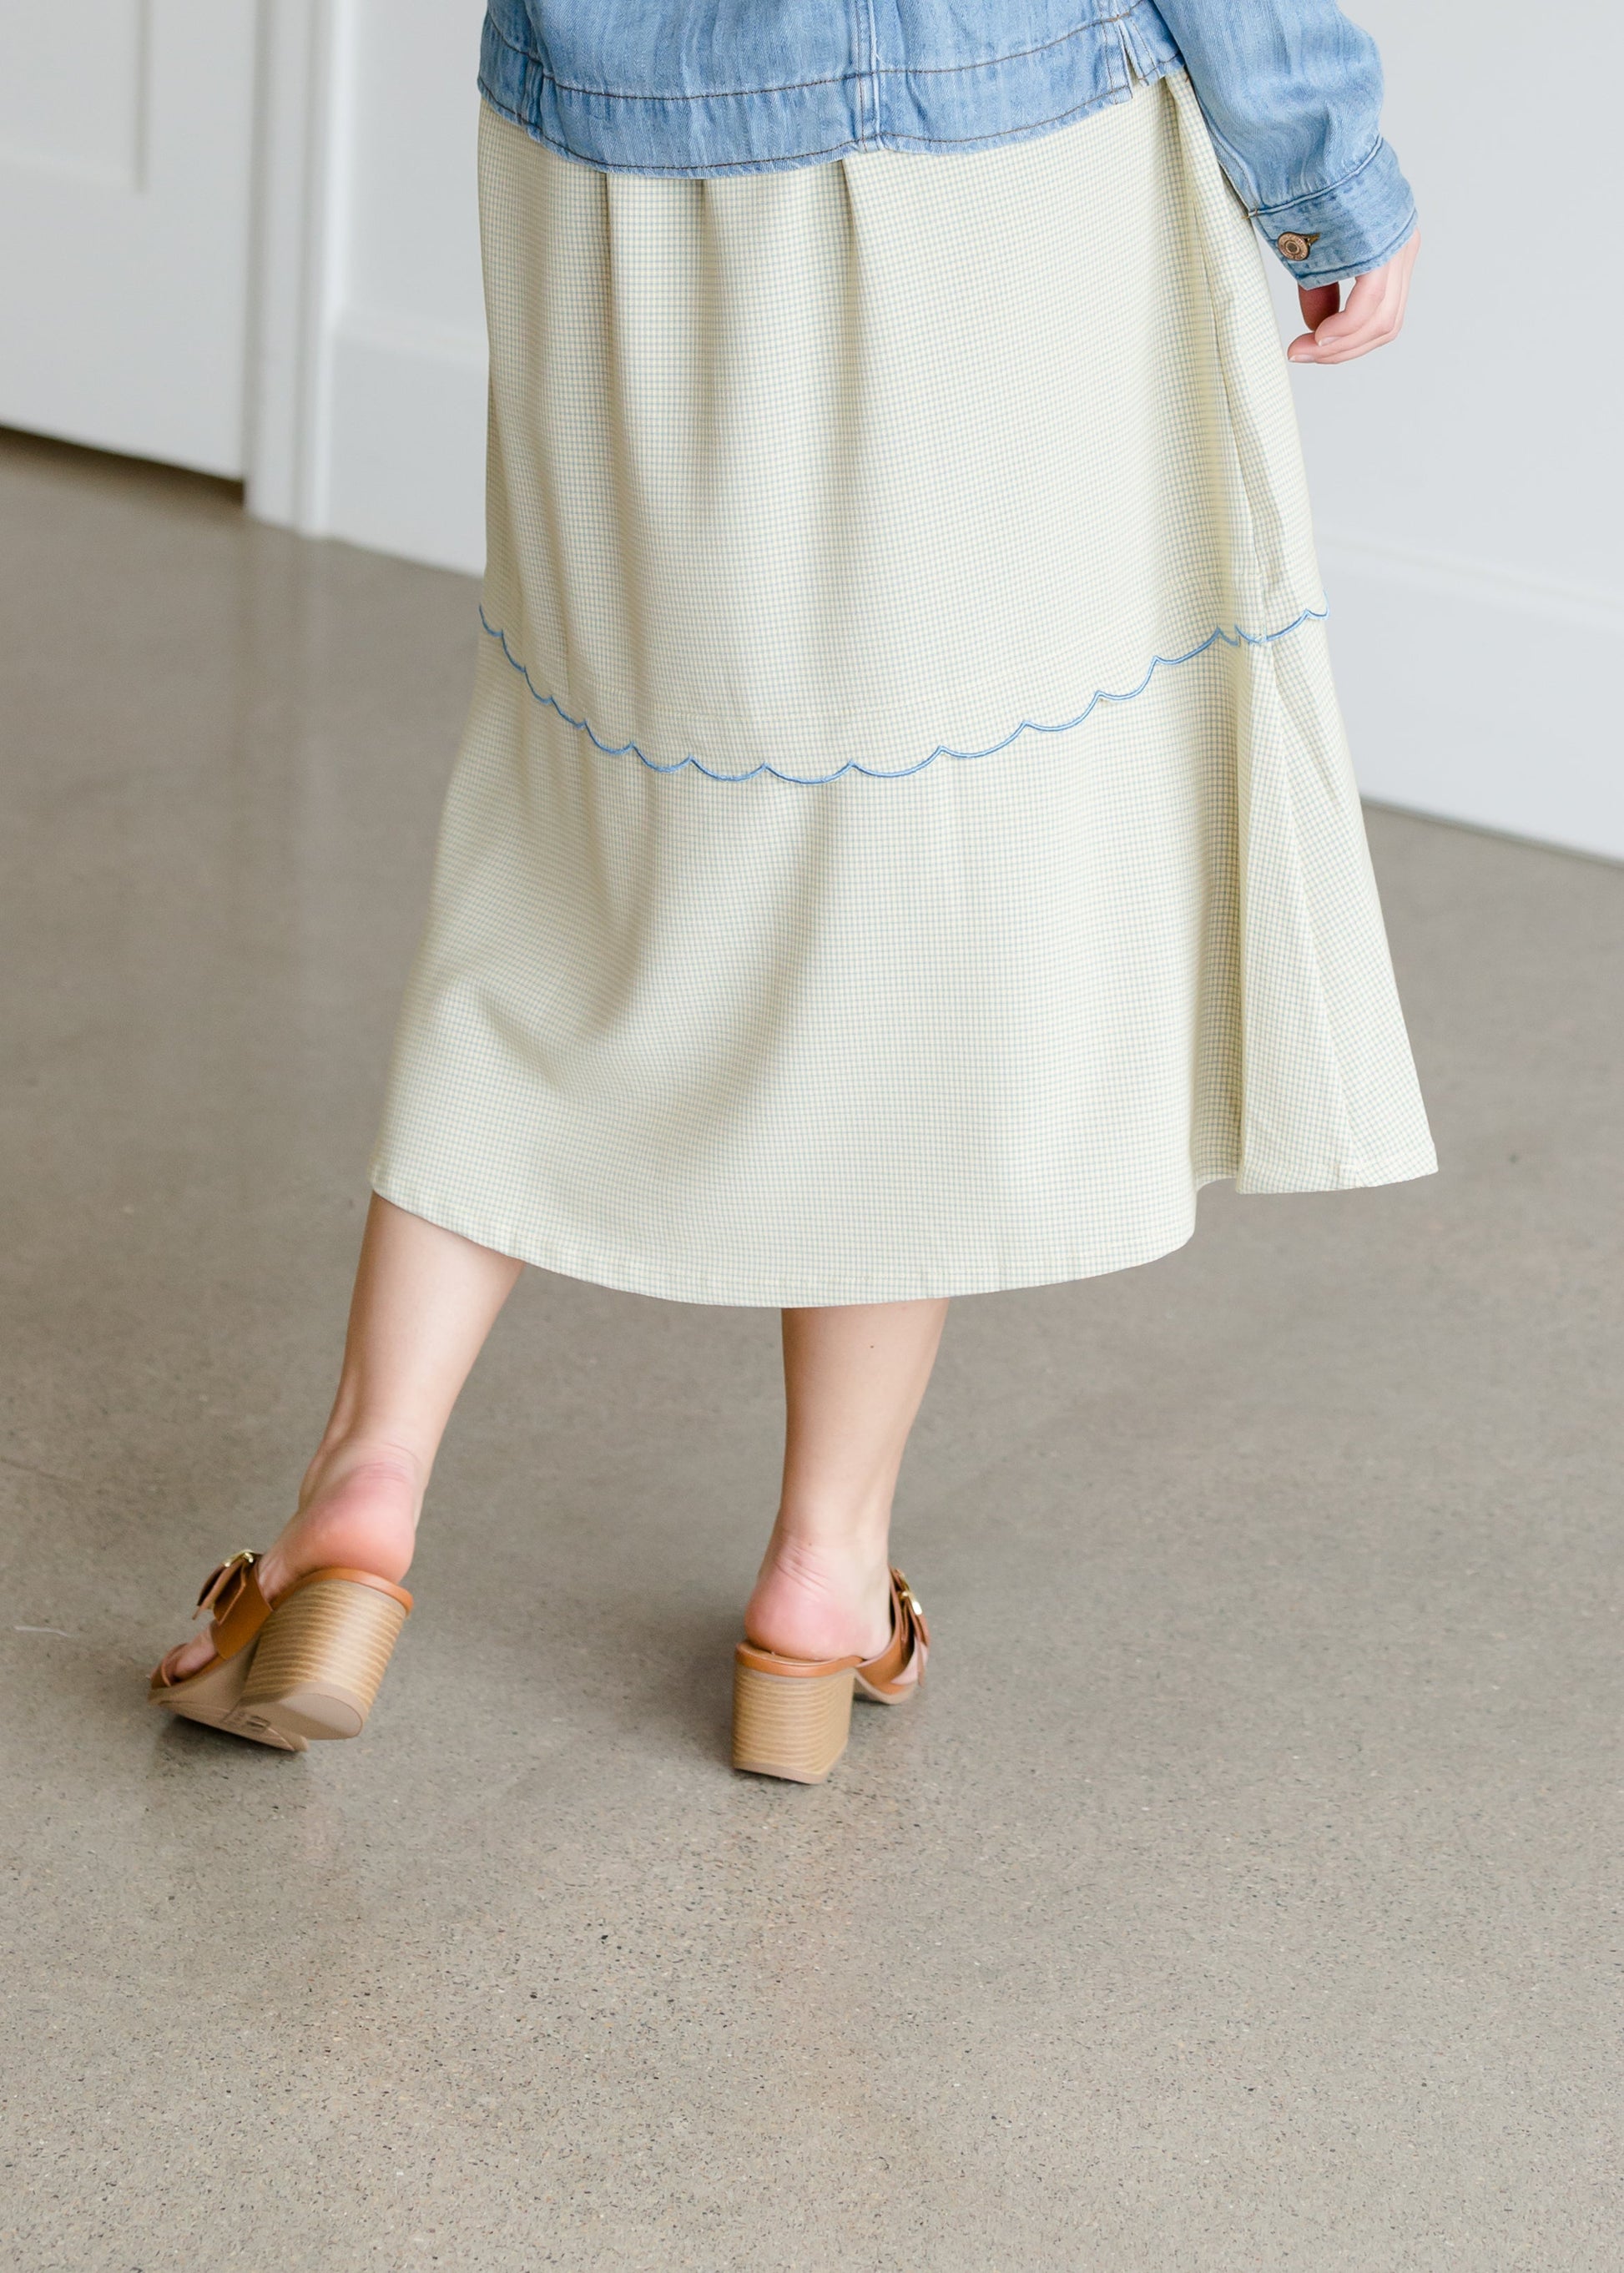 Merrow Edge Midi Dress - FINAL SALE Dresses